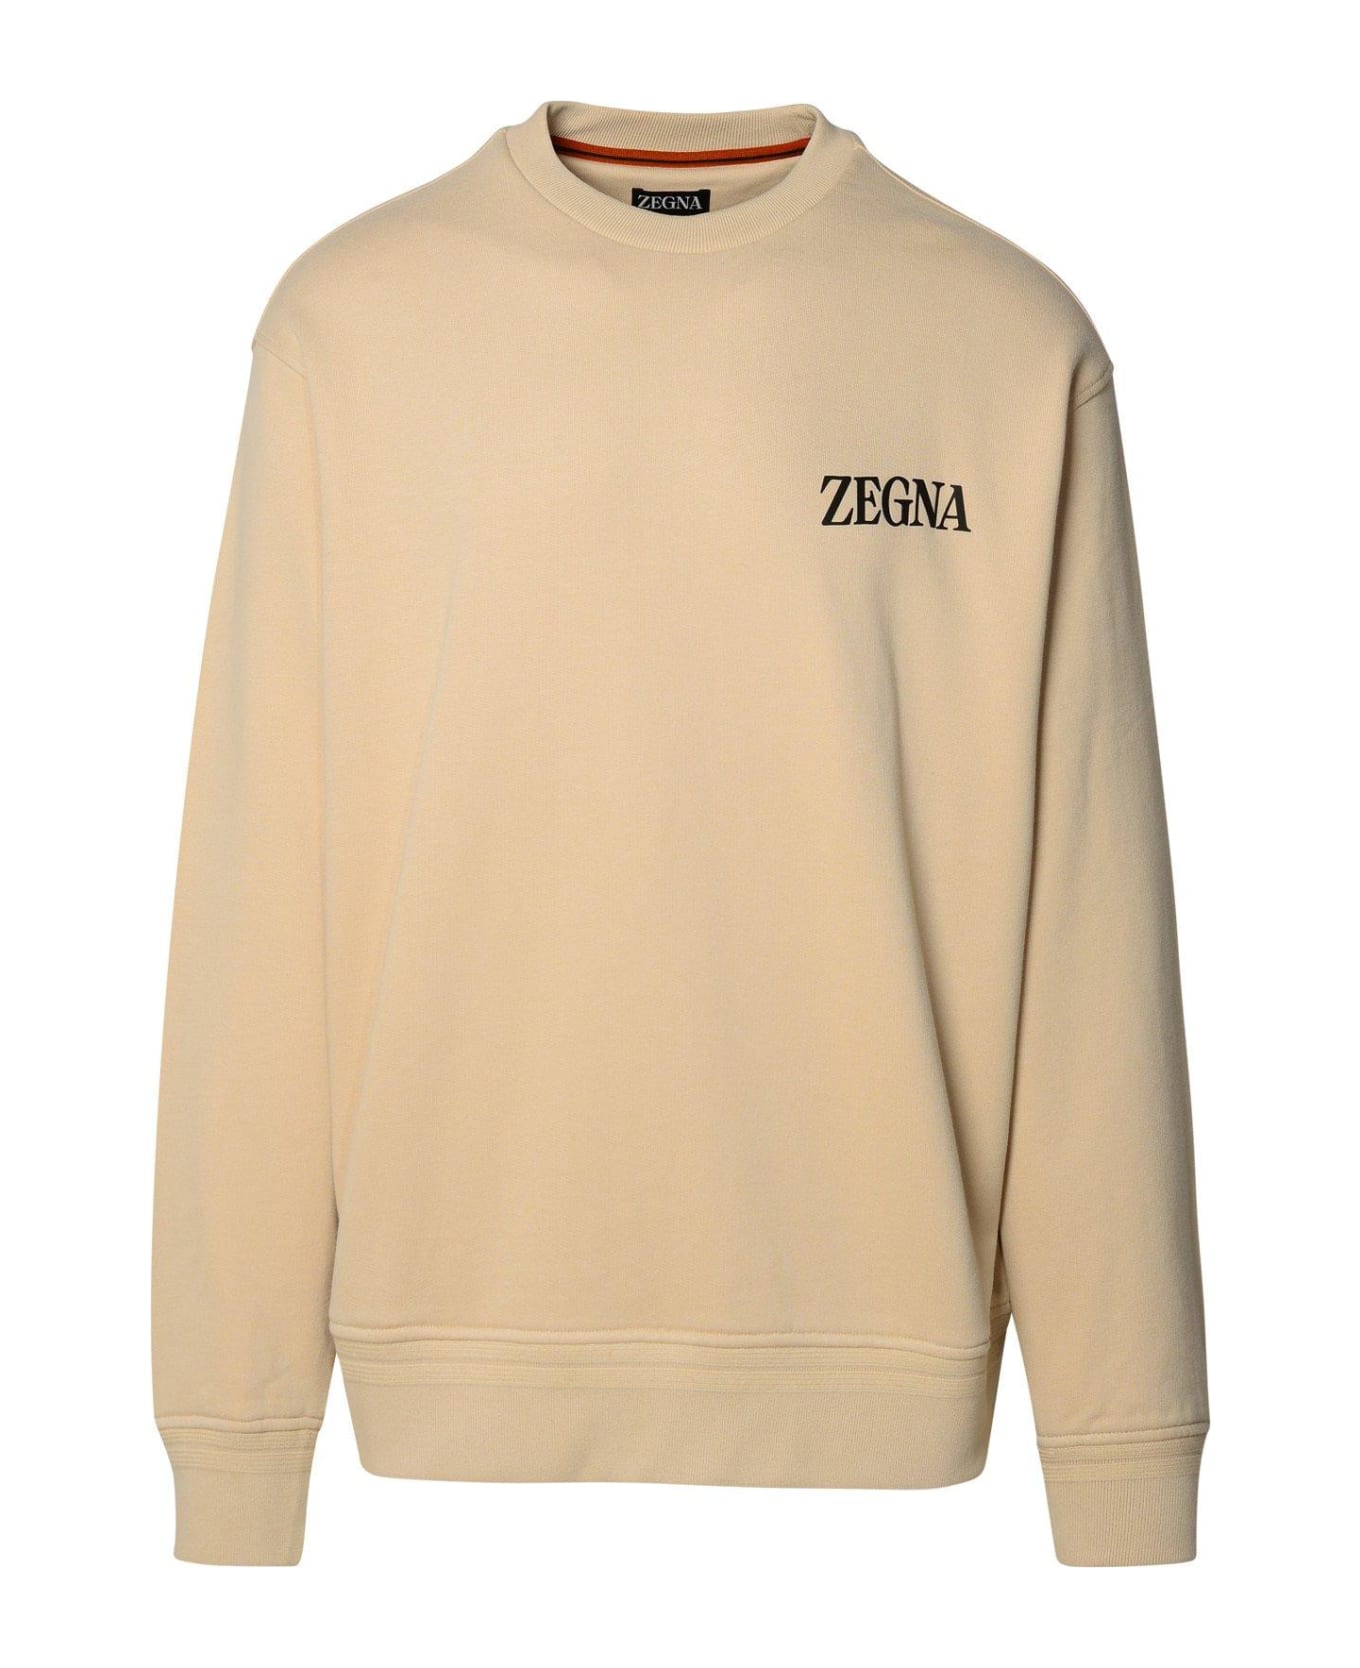 Zegna Logo Prrinted Crewneck Sweatshirt - Beige